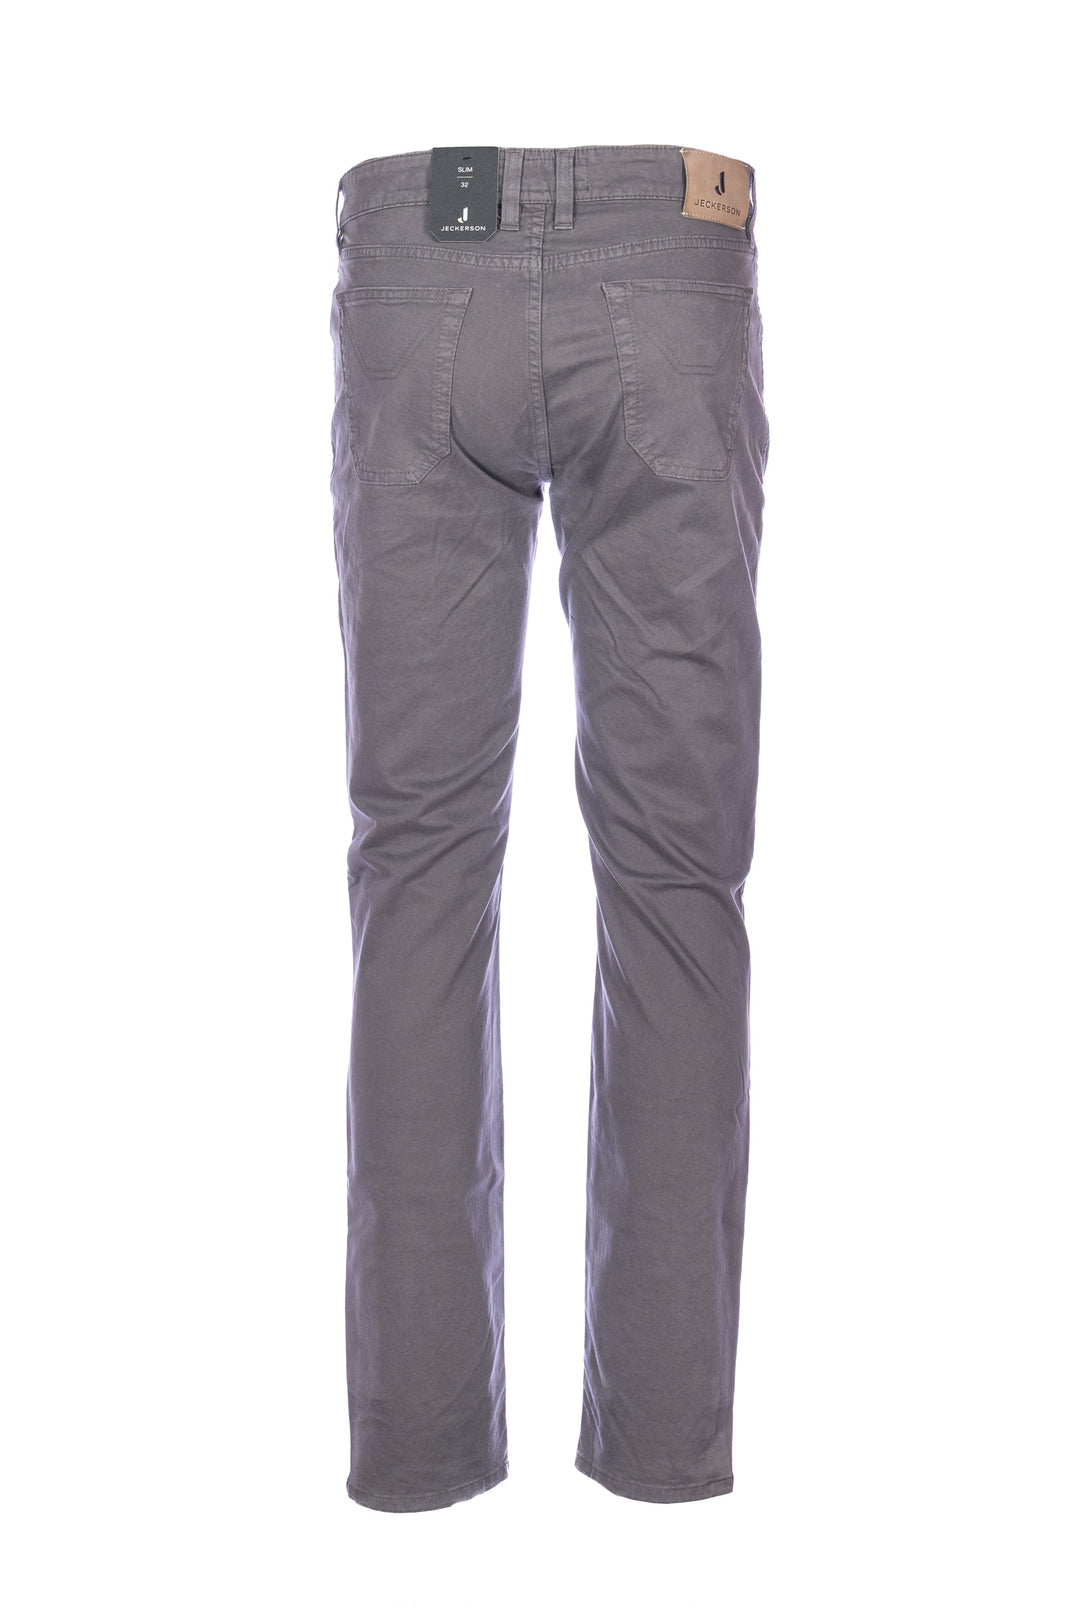 JECKERSON Pantalone slim 5 tasche “JORDAN” grigio in gabardina di cotone stretch - Mancinelli 1954